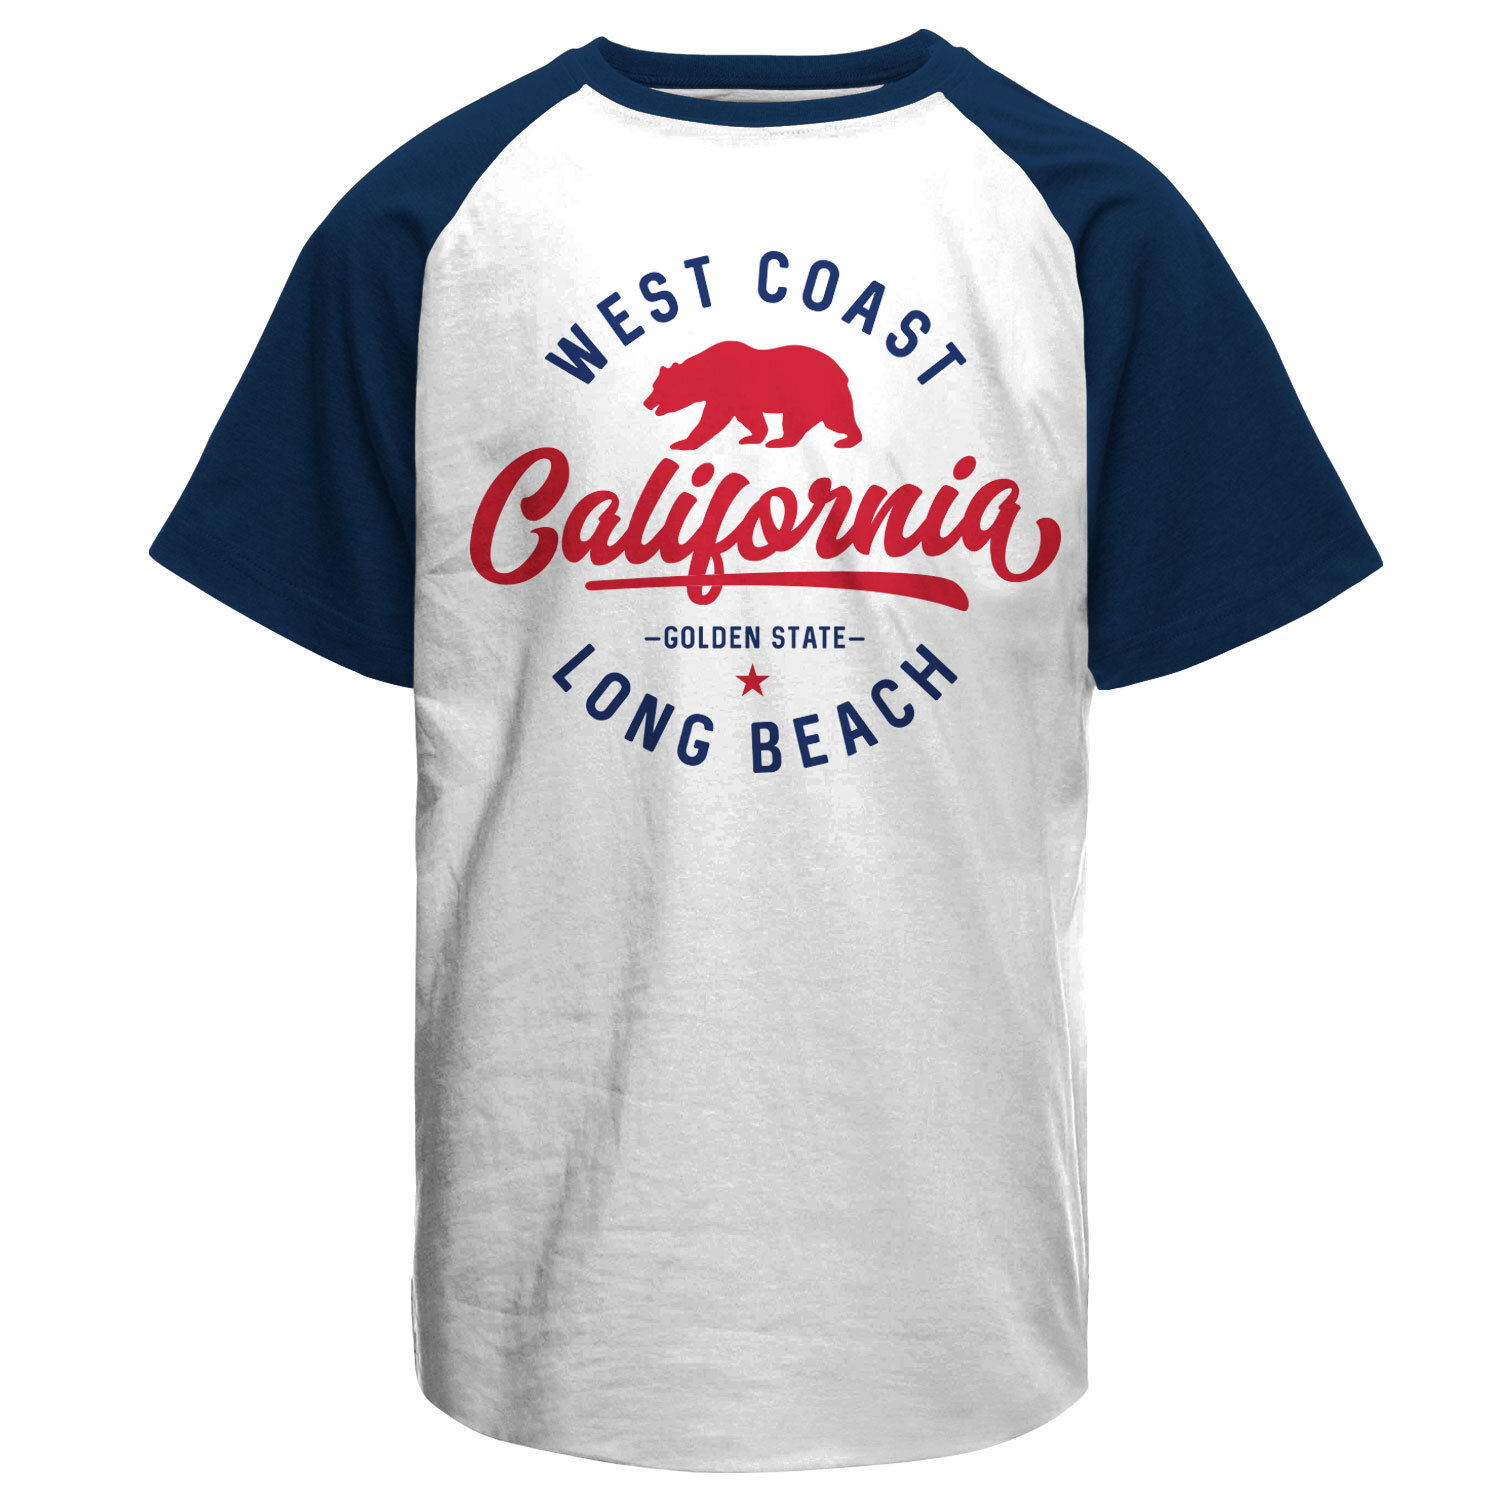 West Coast California Baseball T-Shirt